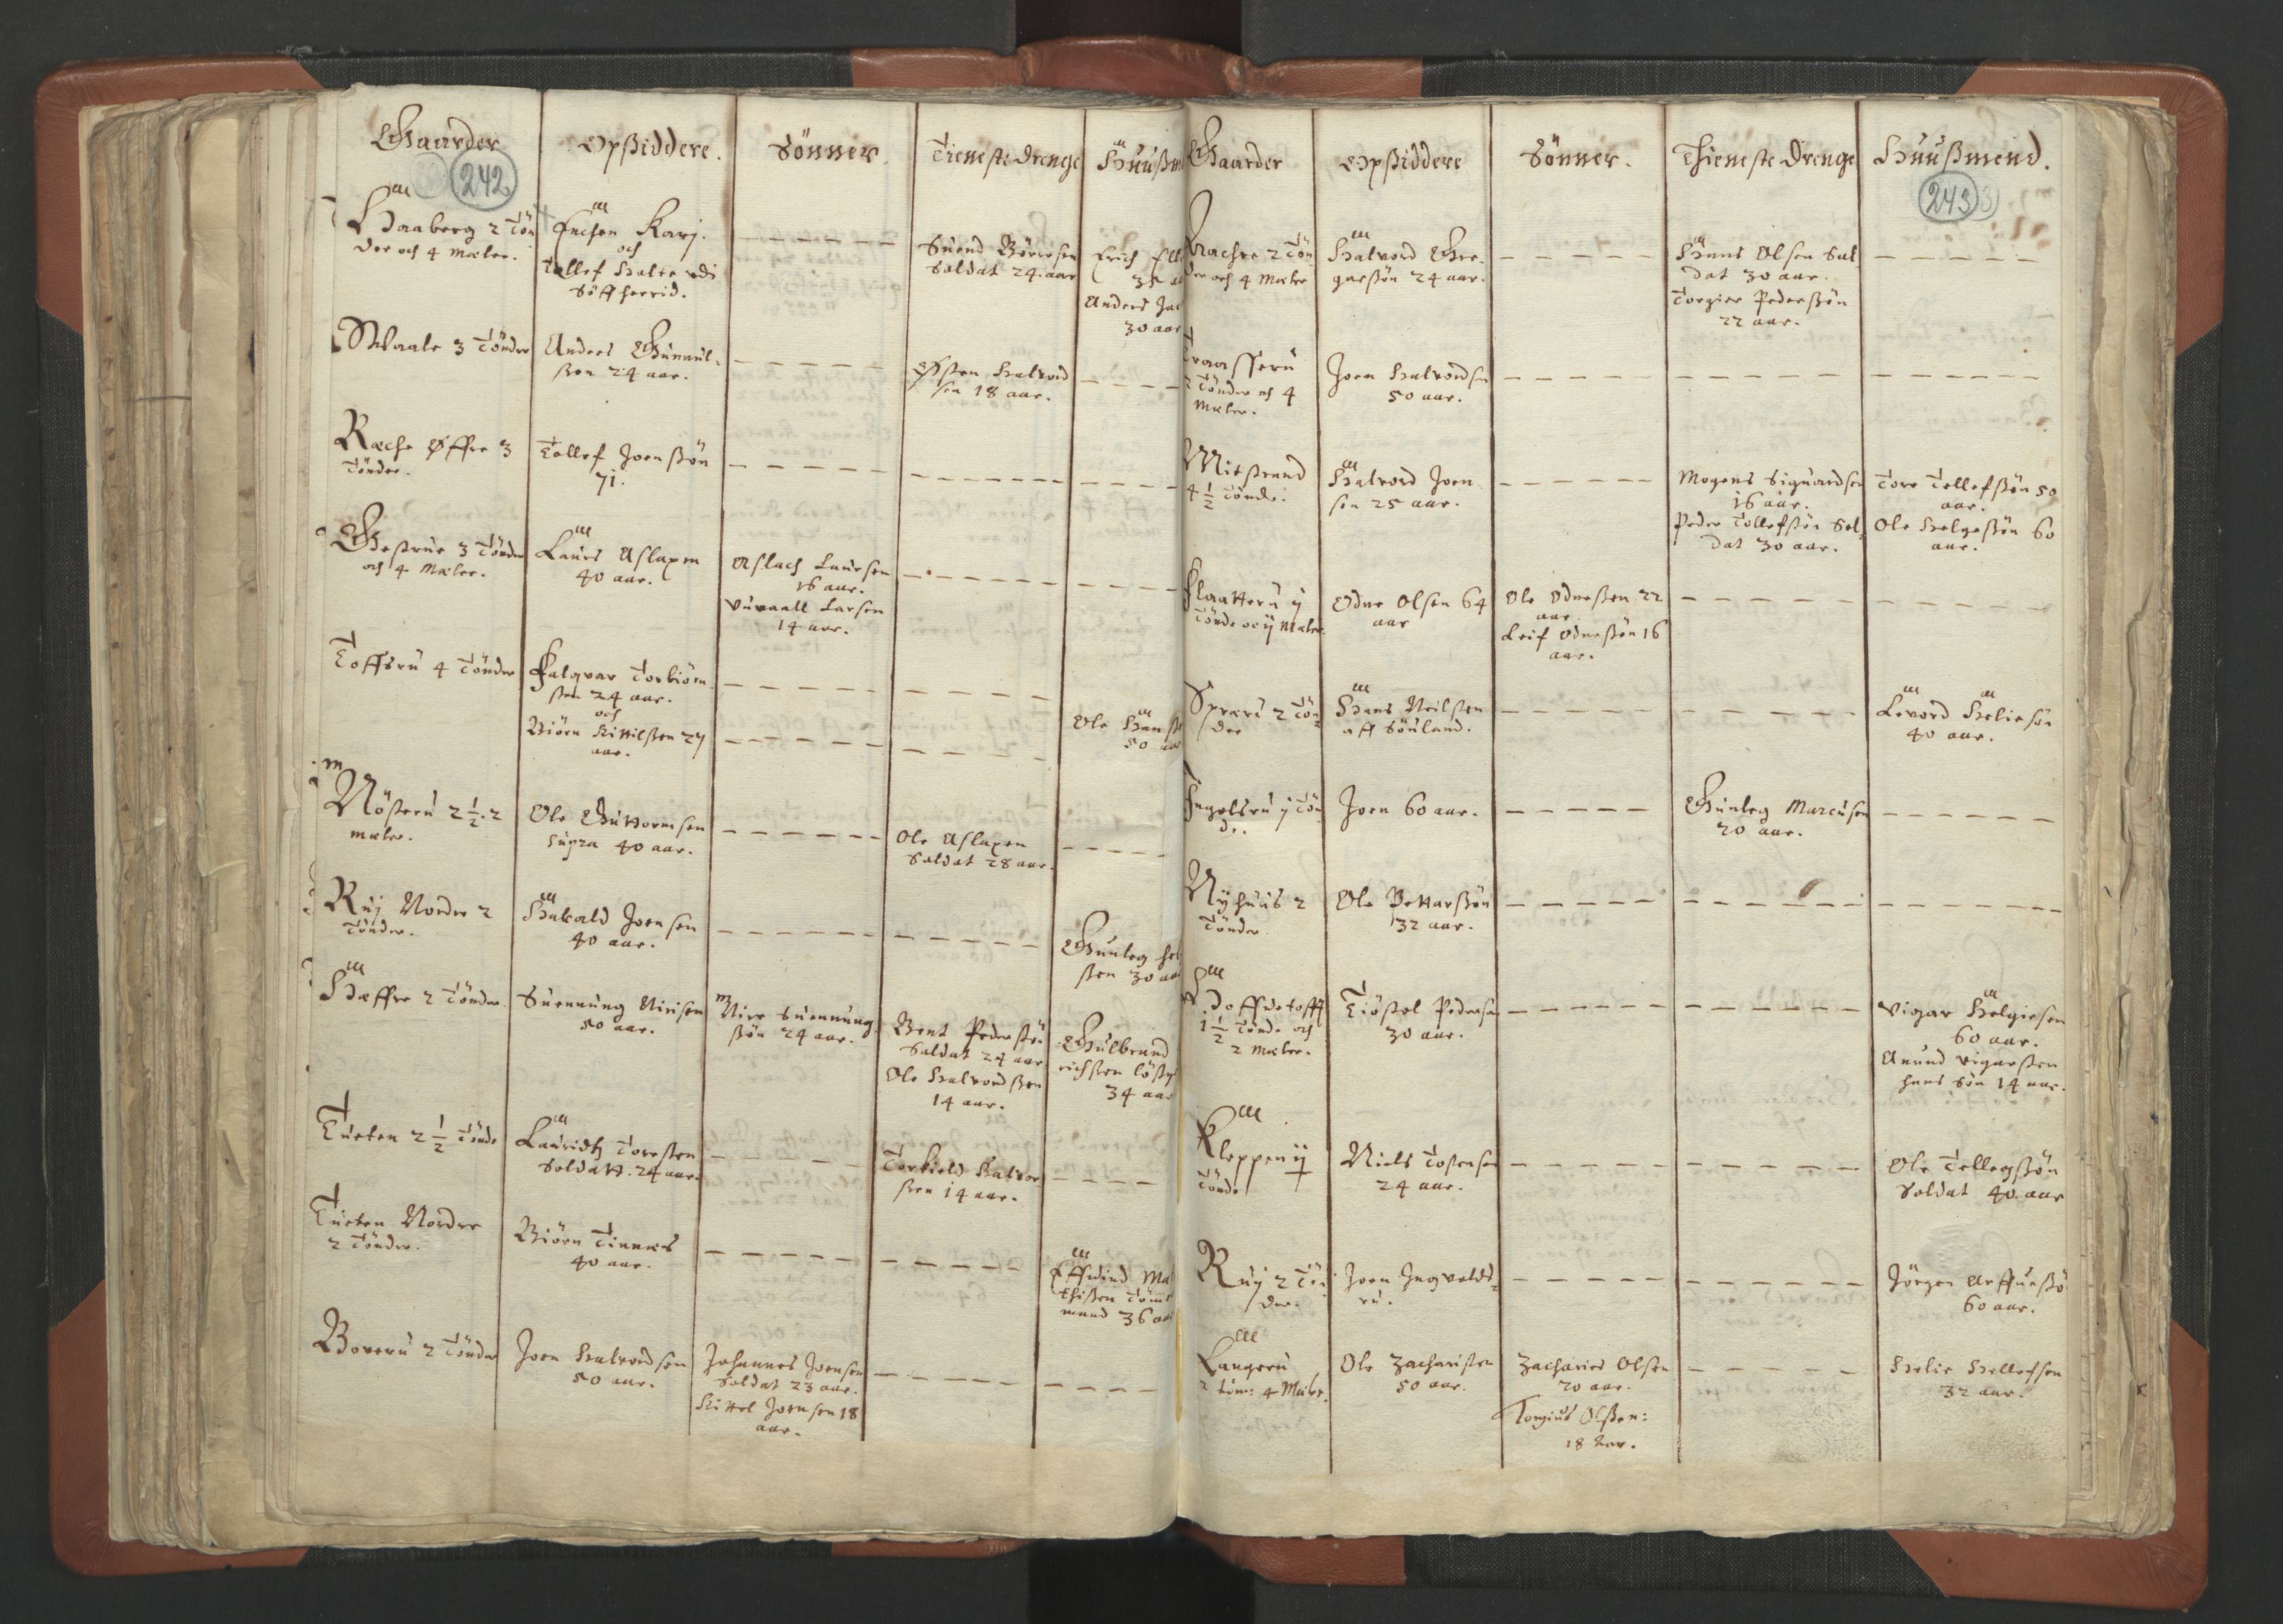 RA, Vicar's Census 1664-1666, no. 12: Øvre Telemark deanery, Nedre Telemark deanery and Bamble deanery, 1664-1666, p. 242-243